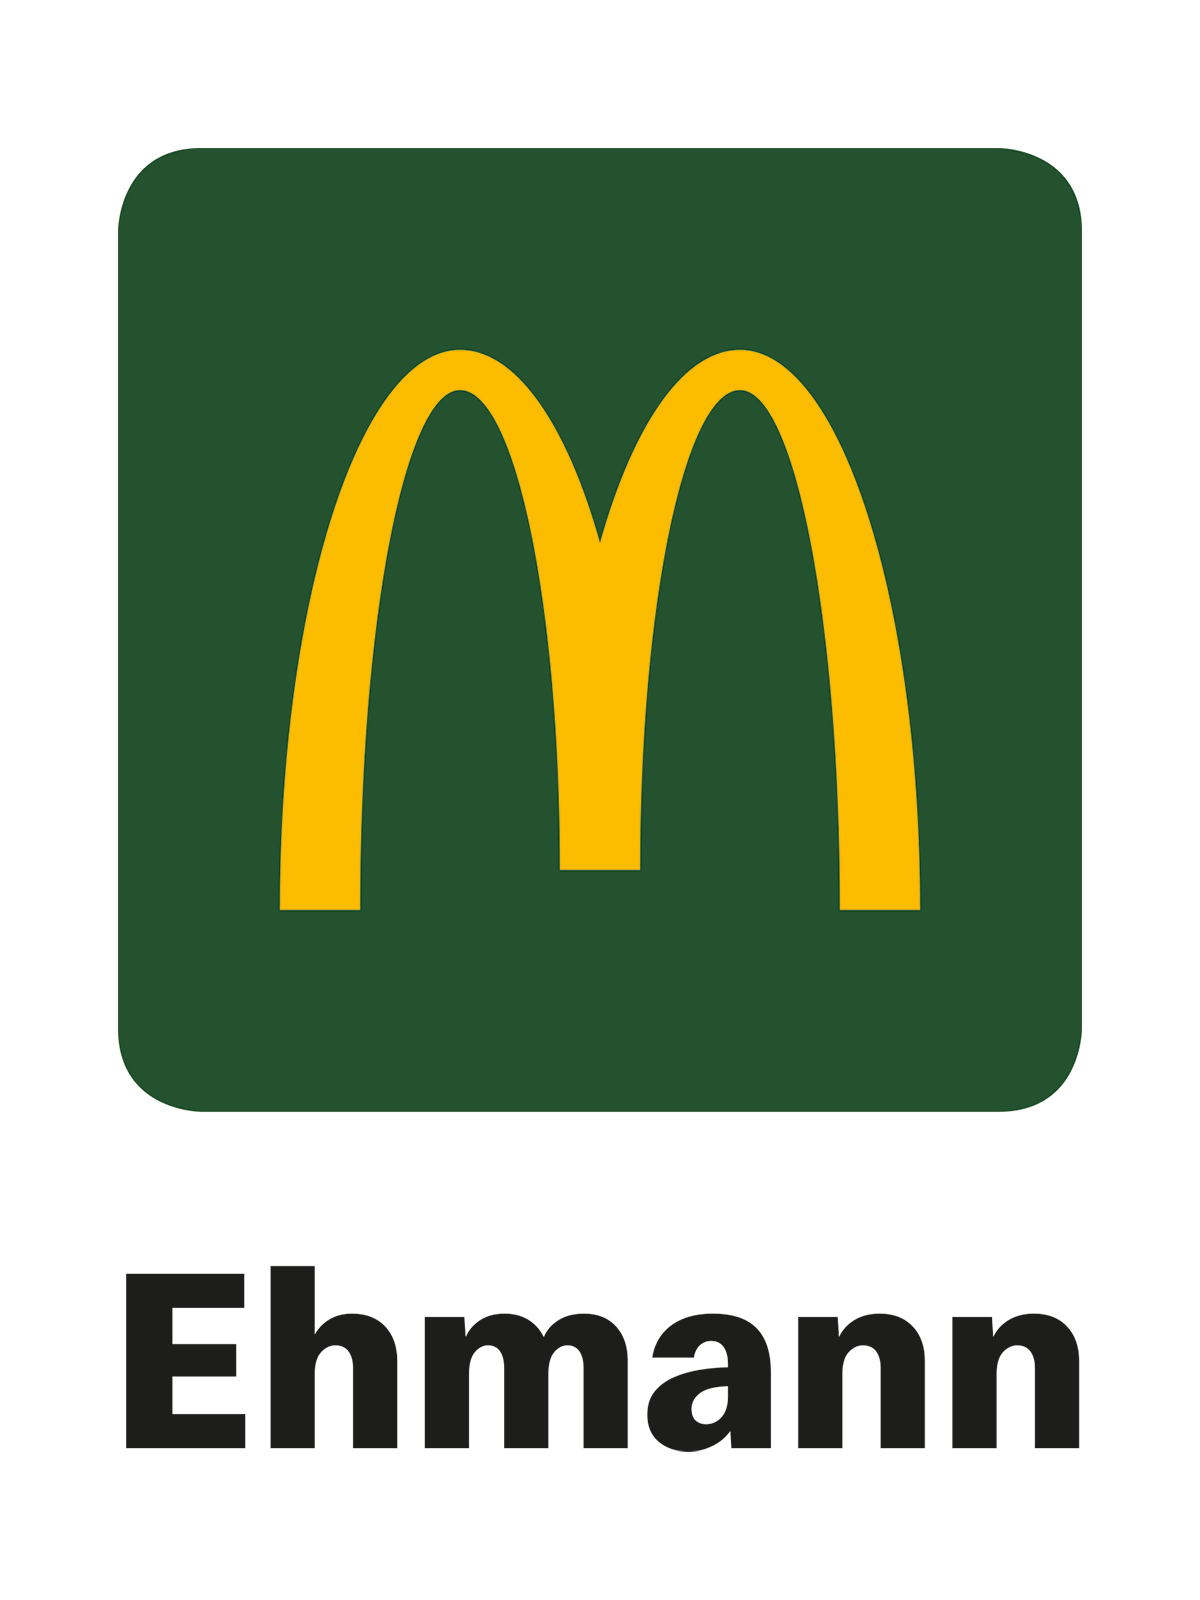 Willkommen bei McDonald's Ehmann